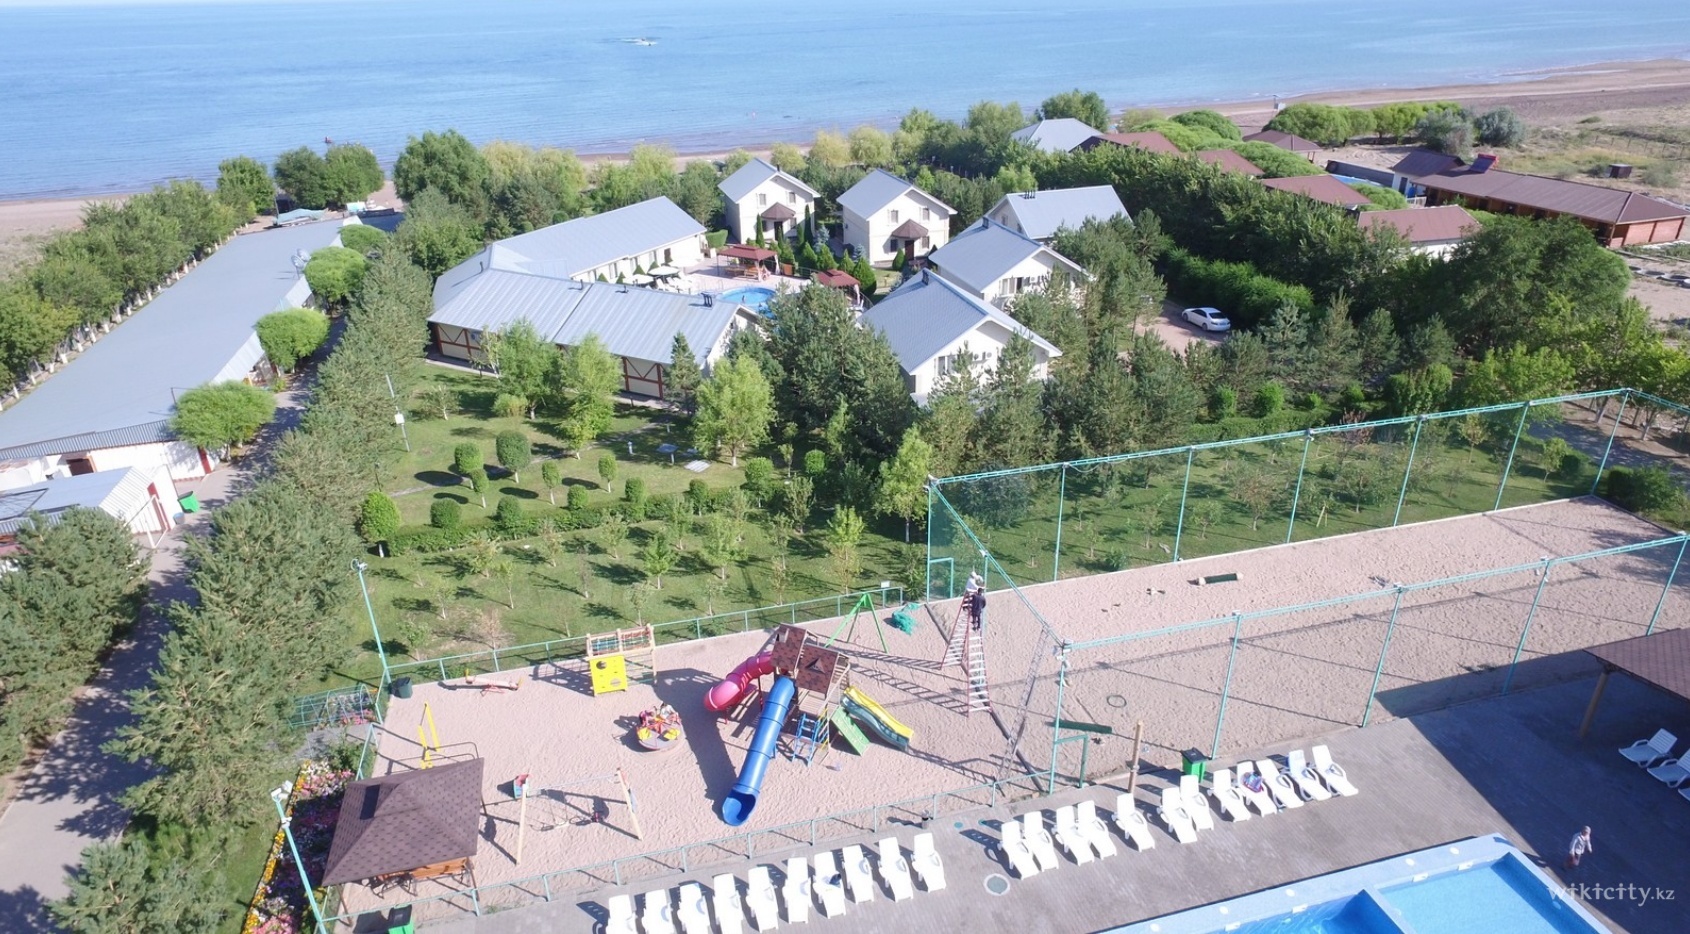 Фото Центр Семейного Отдыха - Kapchik.kz - Конаев. Вид сверху на территорию комплекса